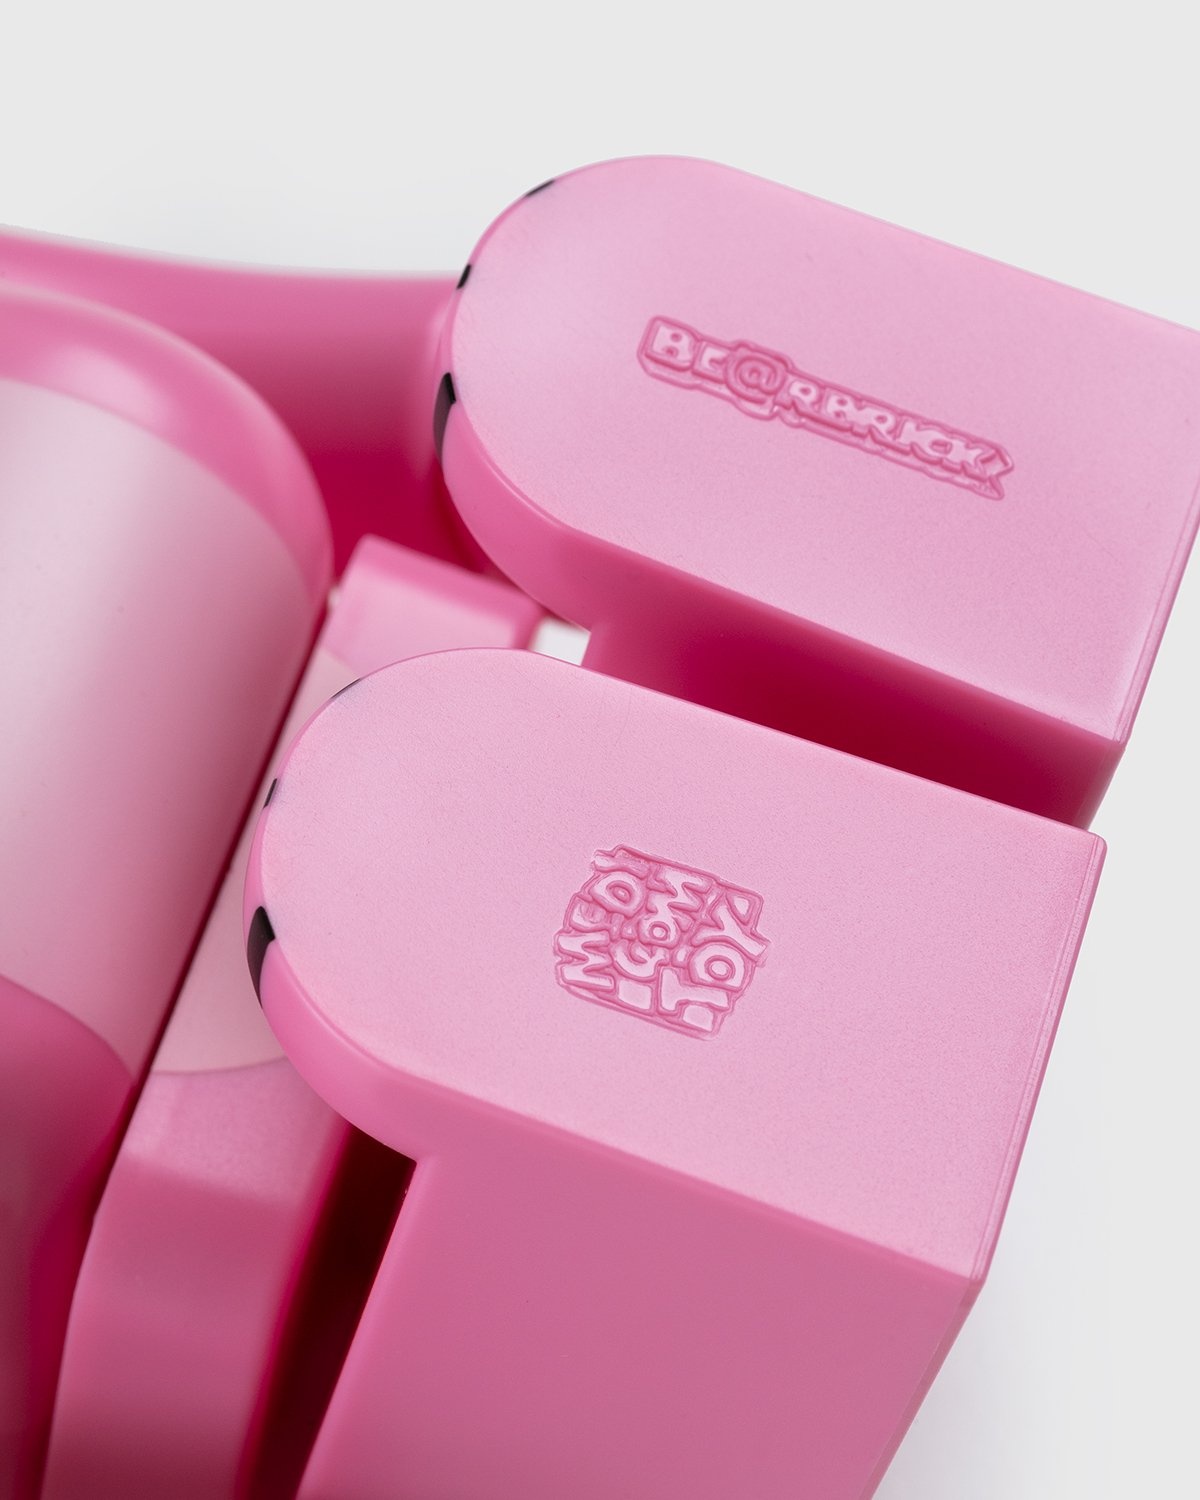 Medicom – Be@rbrick Pink Panther 1000% Pink - Art & Collectibles - Pink - Image 6